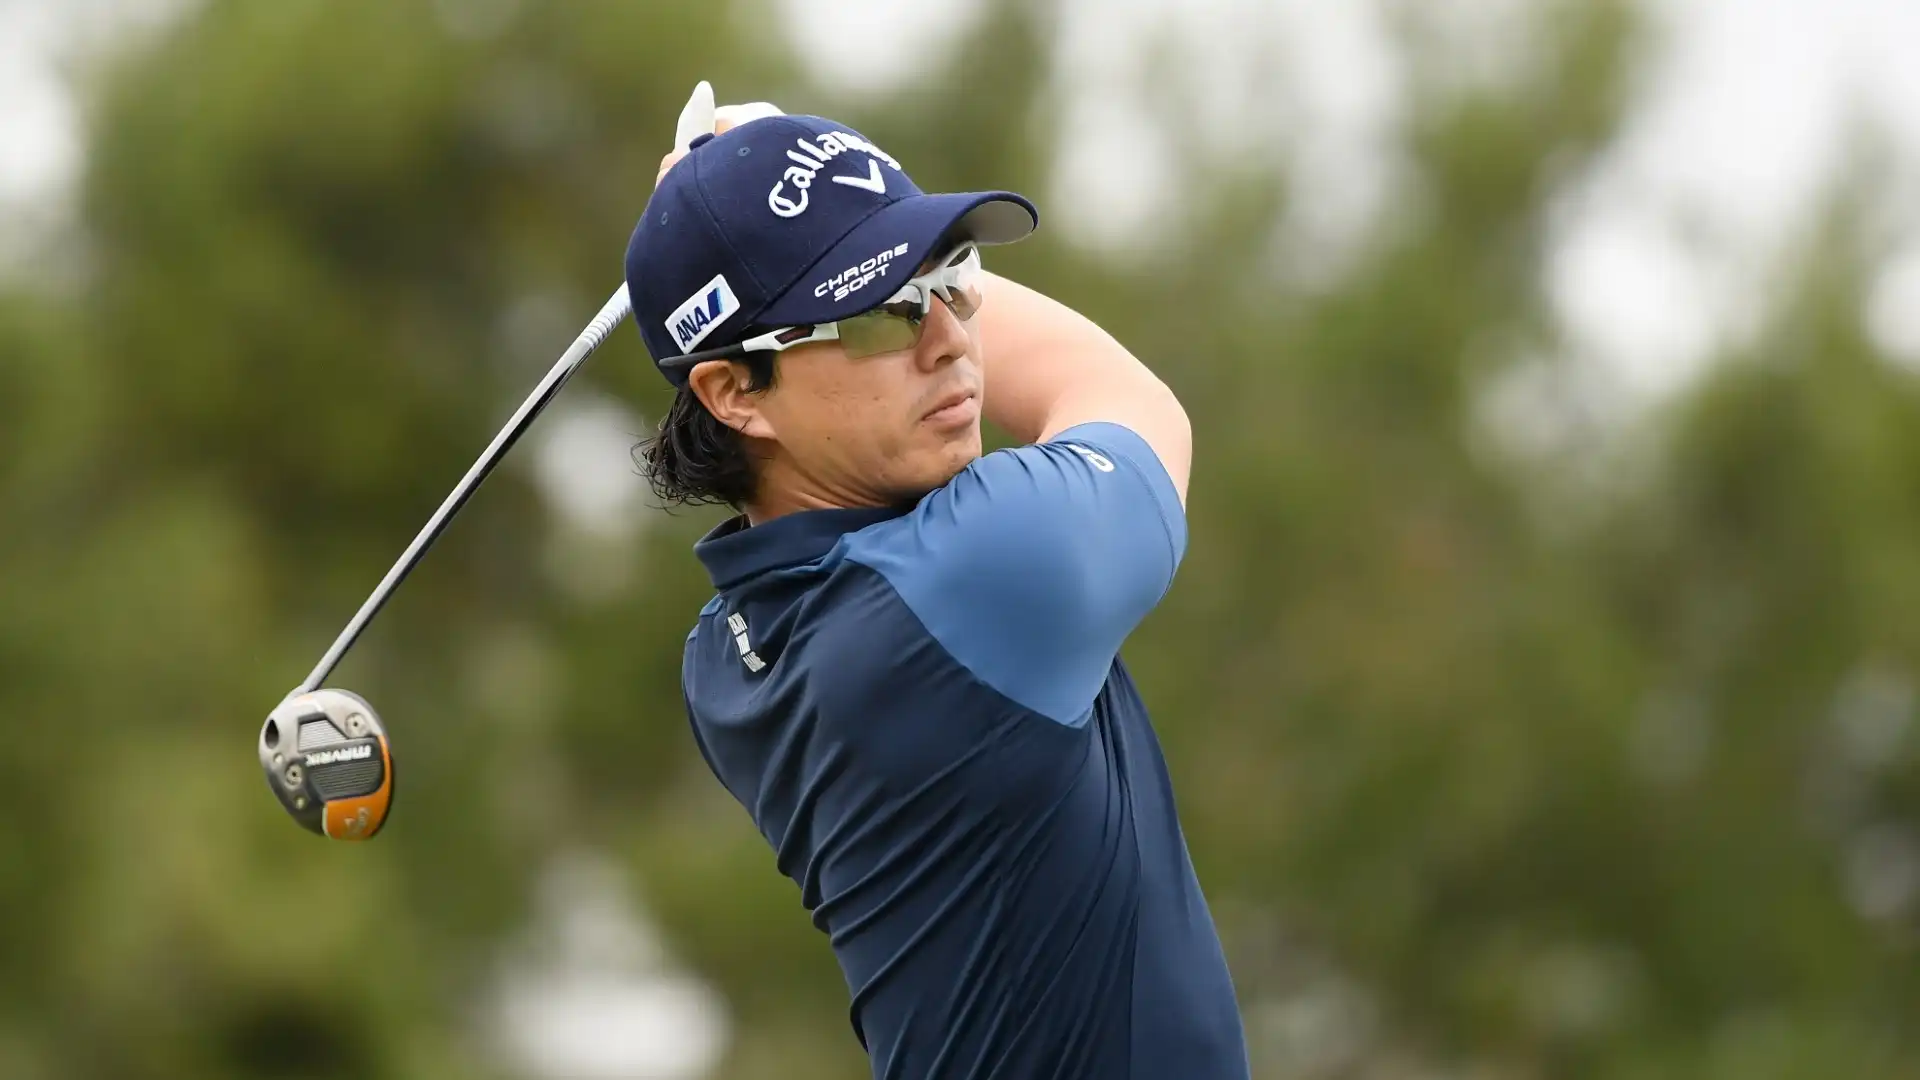 Ryo Ishikawa (golf): guadagni stimati 7,5 milioni di dollari